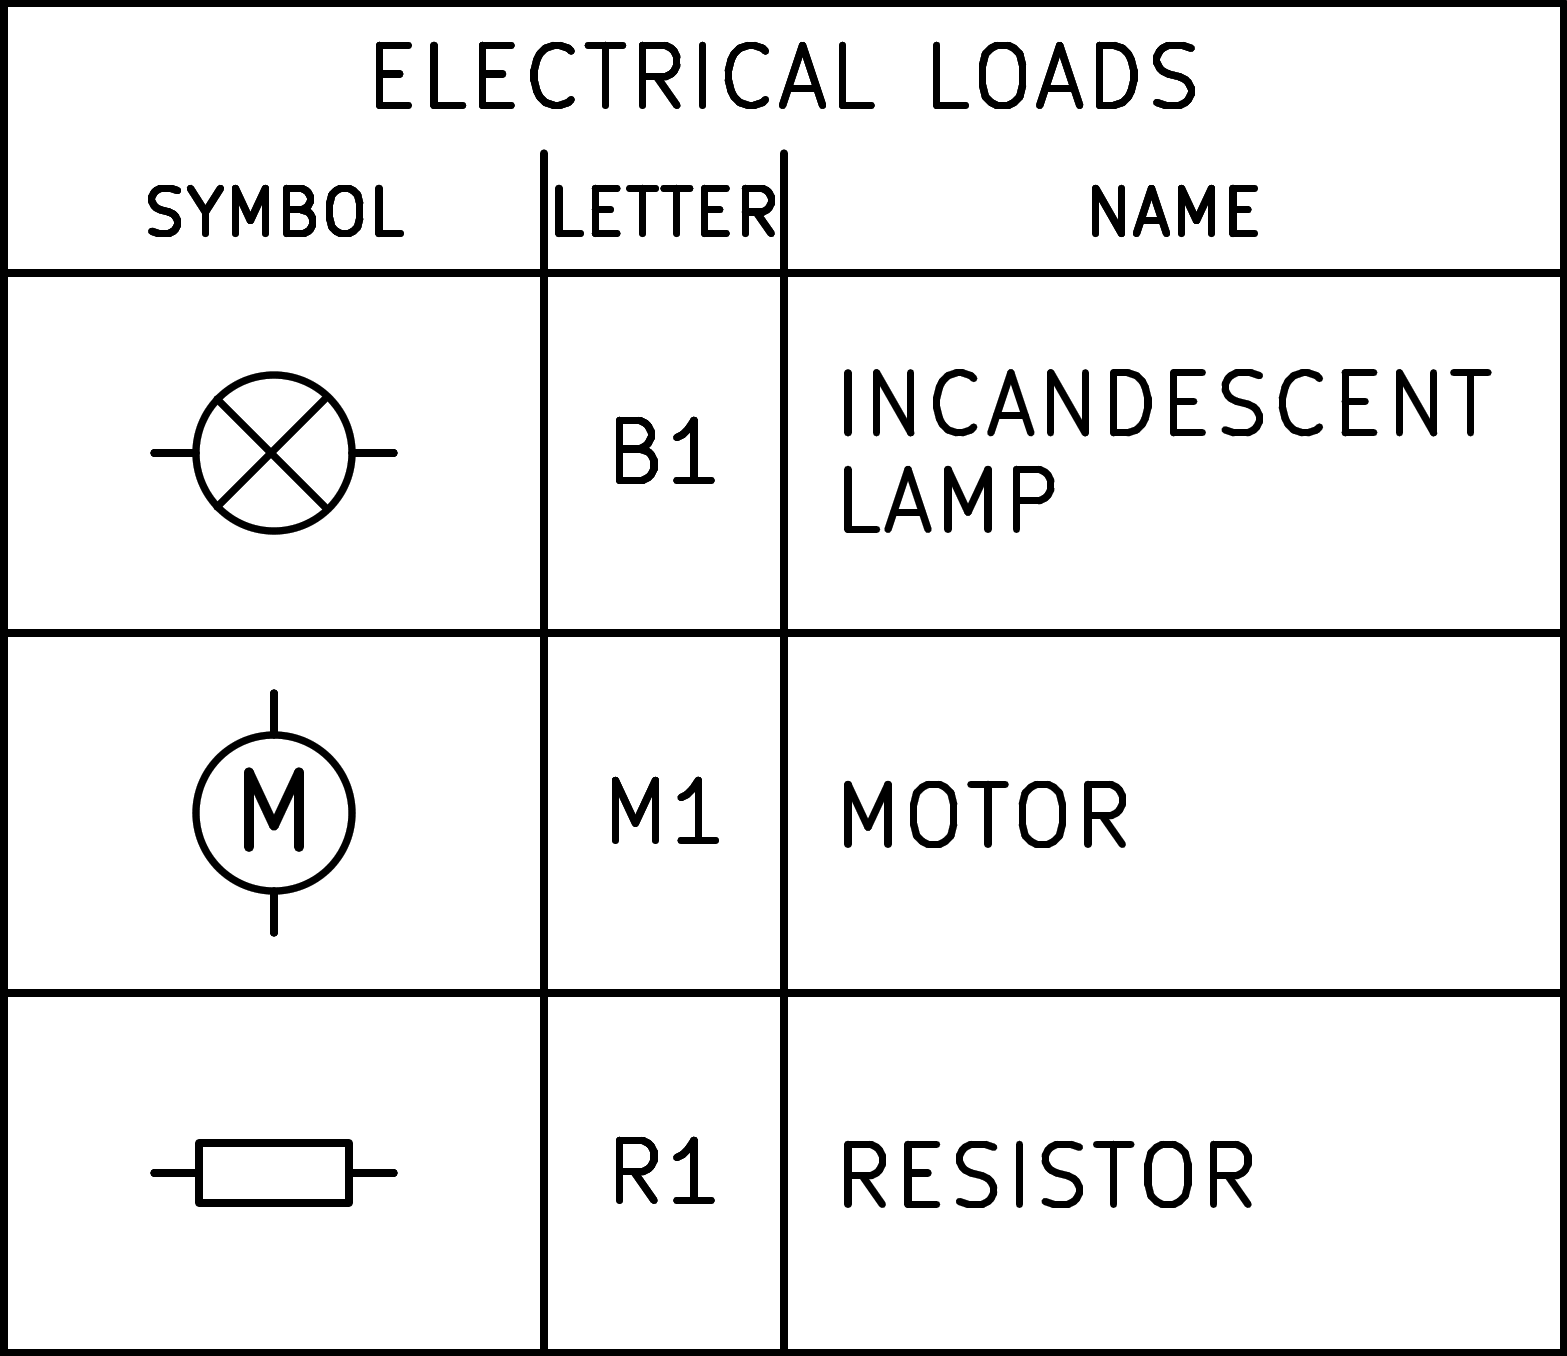 _images/electric-simbolos-receptores.en.png